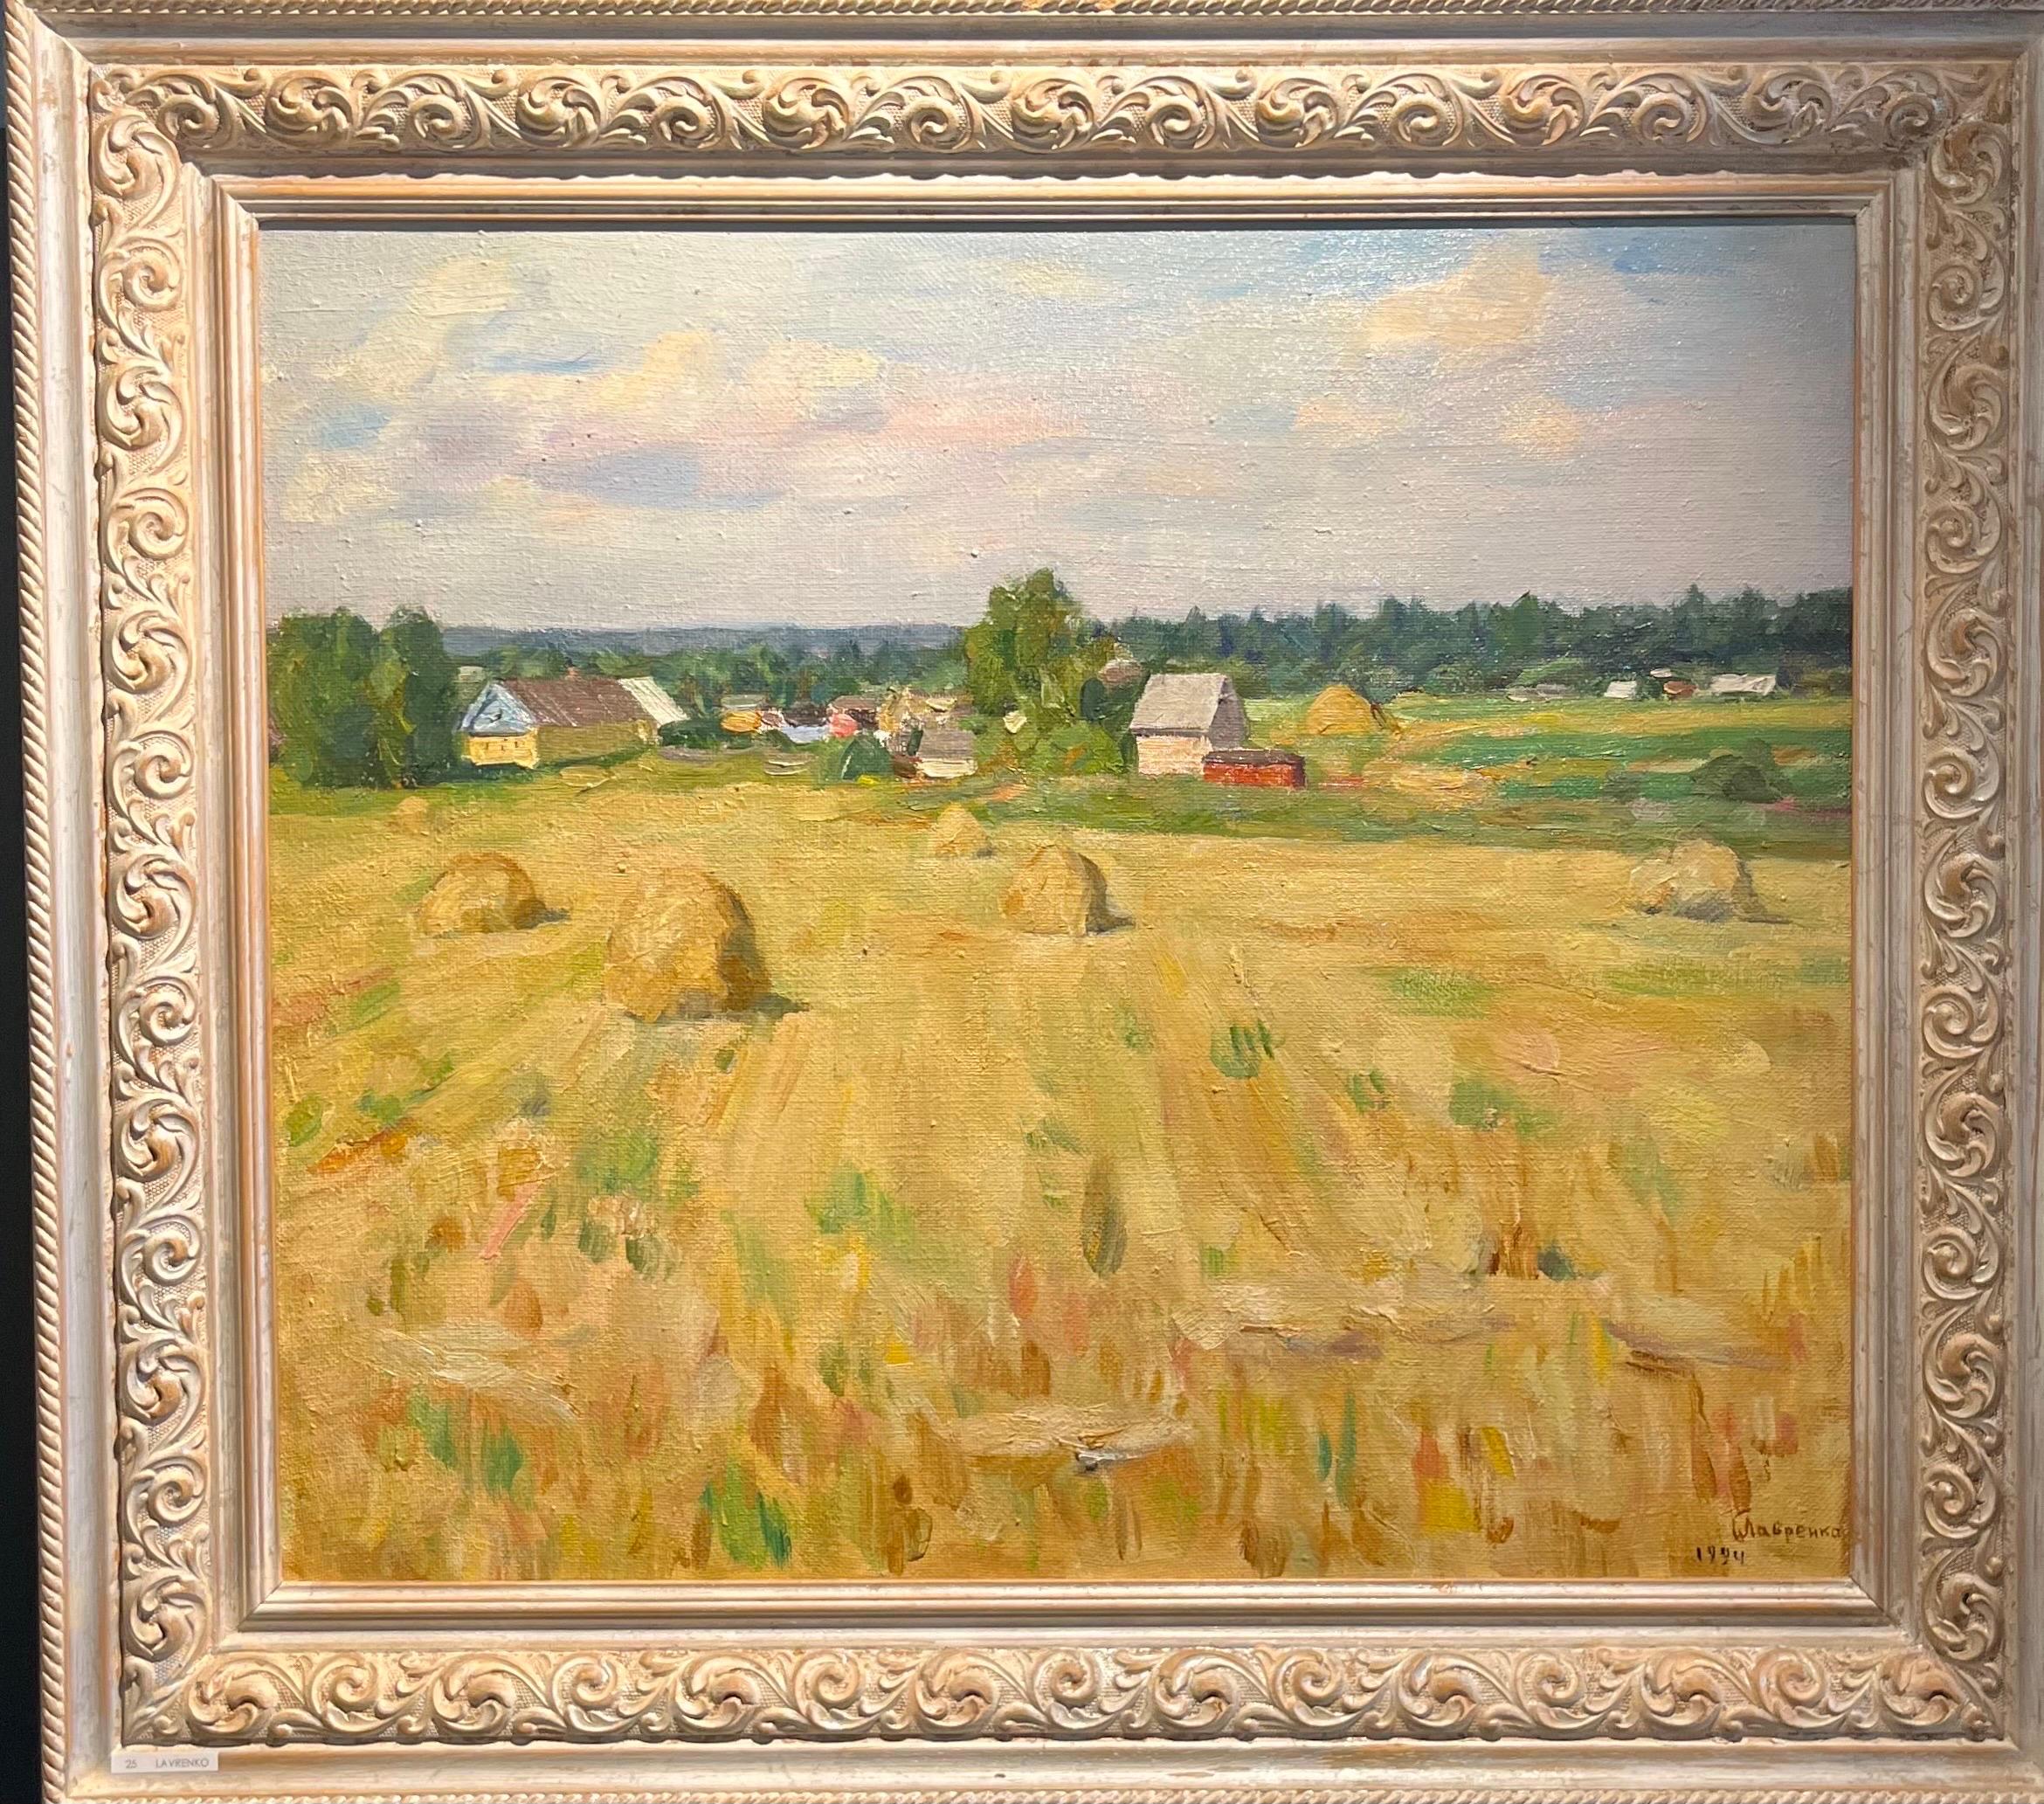 Boris LAVRENKO Landscape Painting - "Fields of Wheat" Oil cm. 70 x 60 , 1994